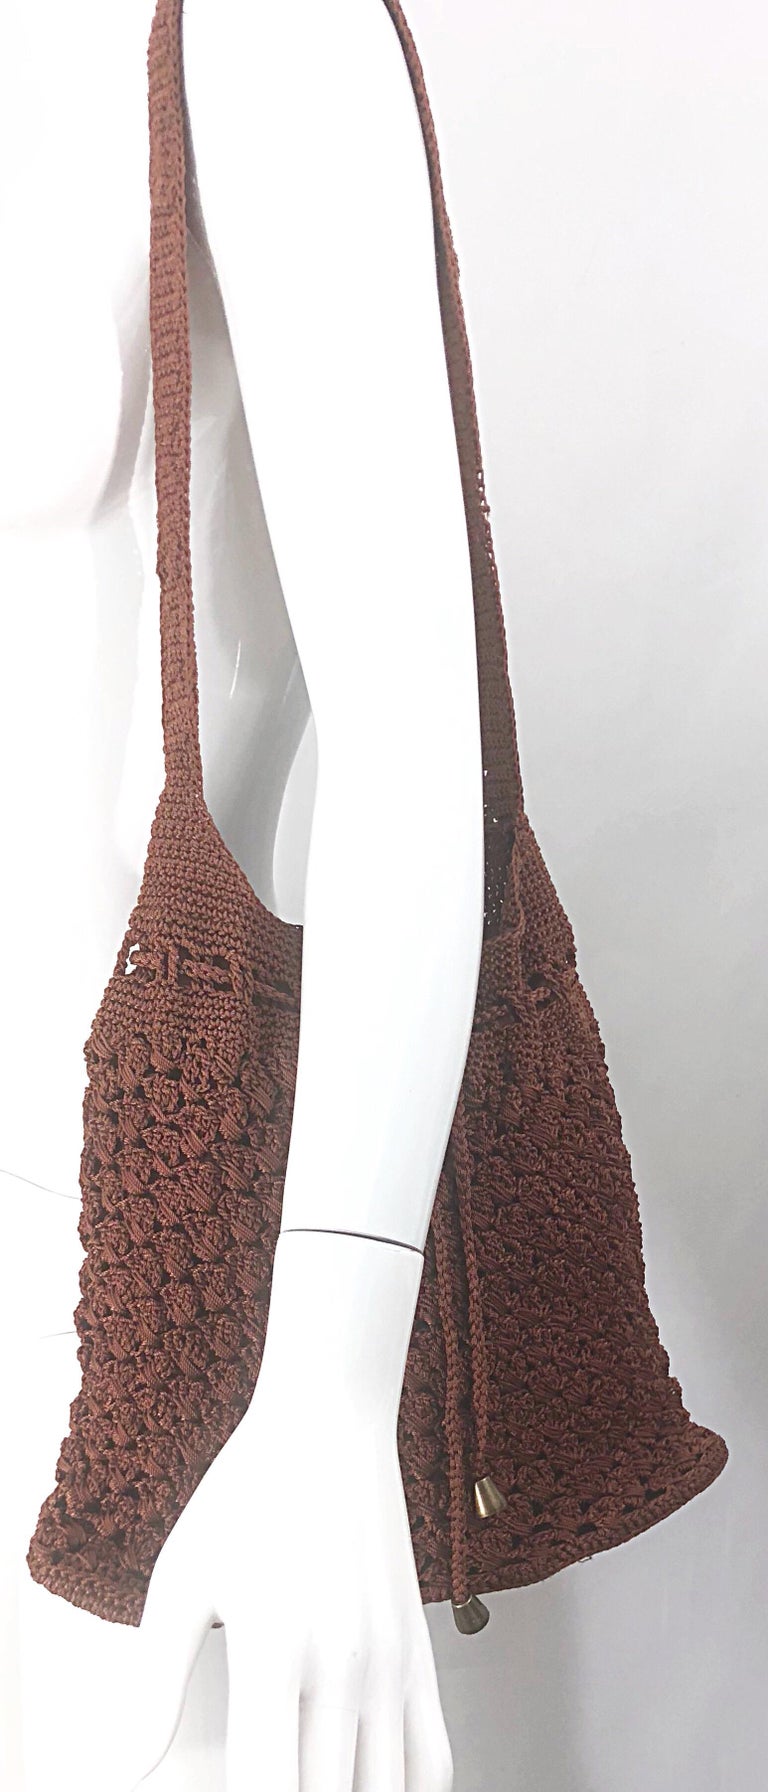 1970s Light Brown Italian Rayon Crochet Boho Vintage 70s Hobo Shoulder Bag For Sale at 1stdibs